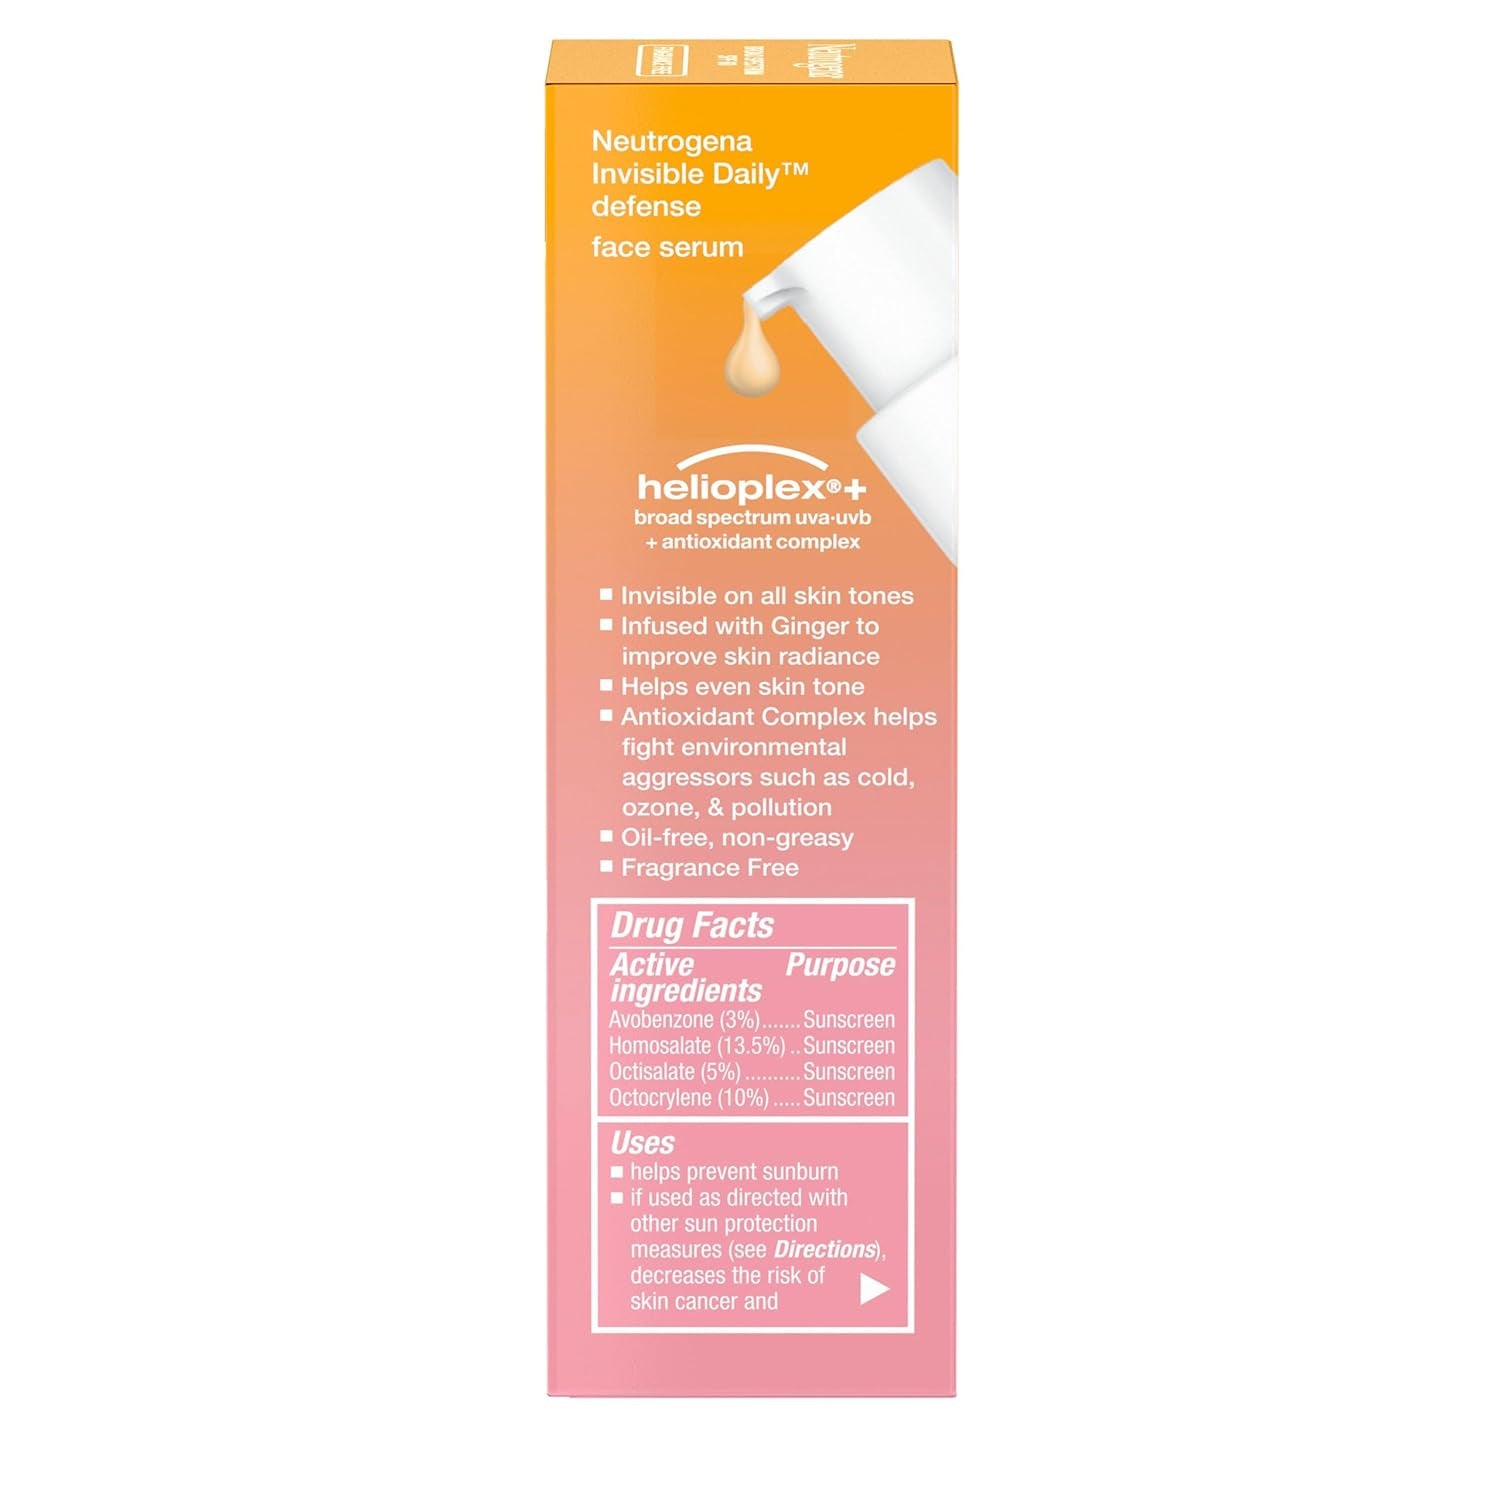 Neutrogena Glow-Boosting Face Sunscreen Serum SPF 60, Oil-Free - 1.7 Fl. Oz